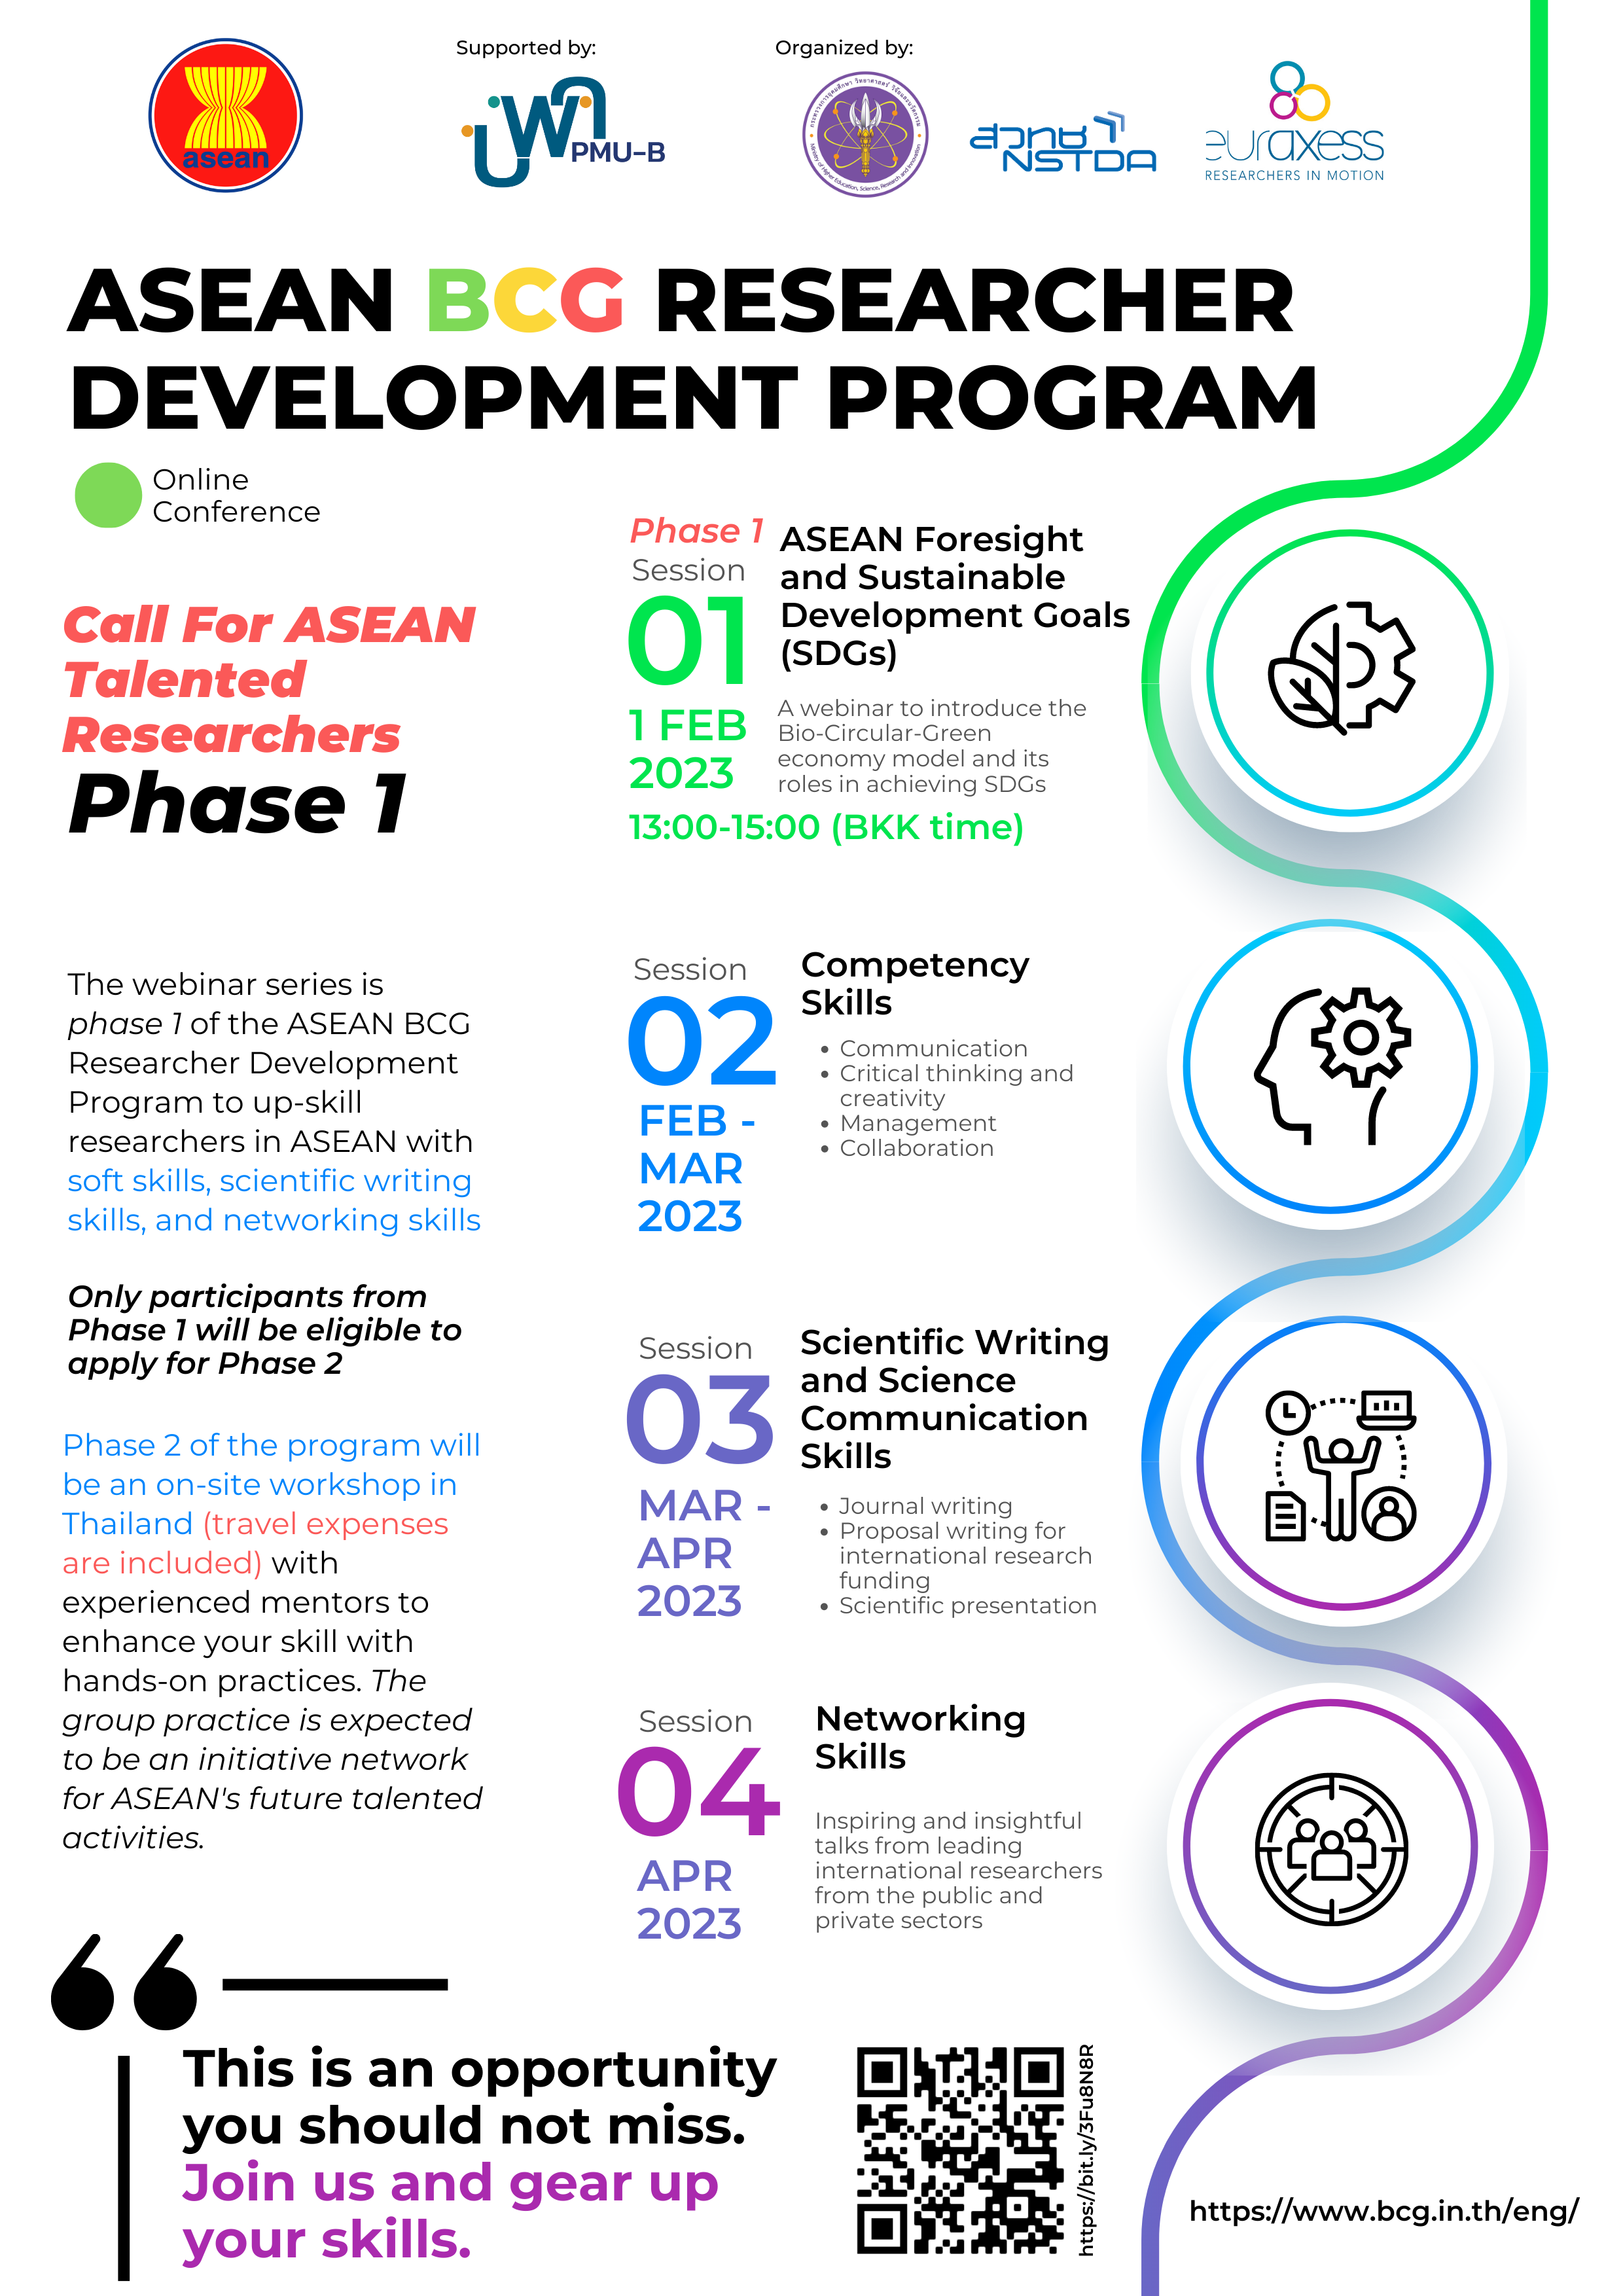 Call for Participation: ASEAN BCG Researcher Development Program 2023